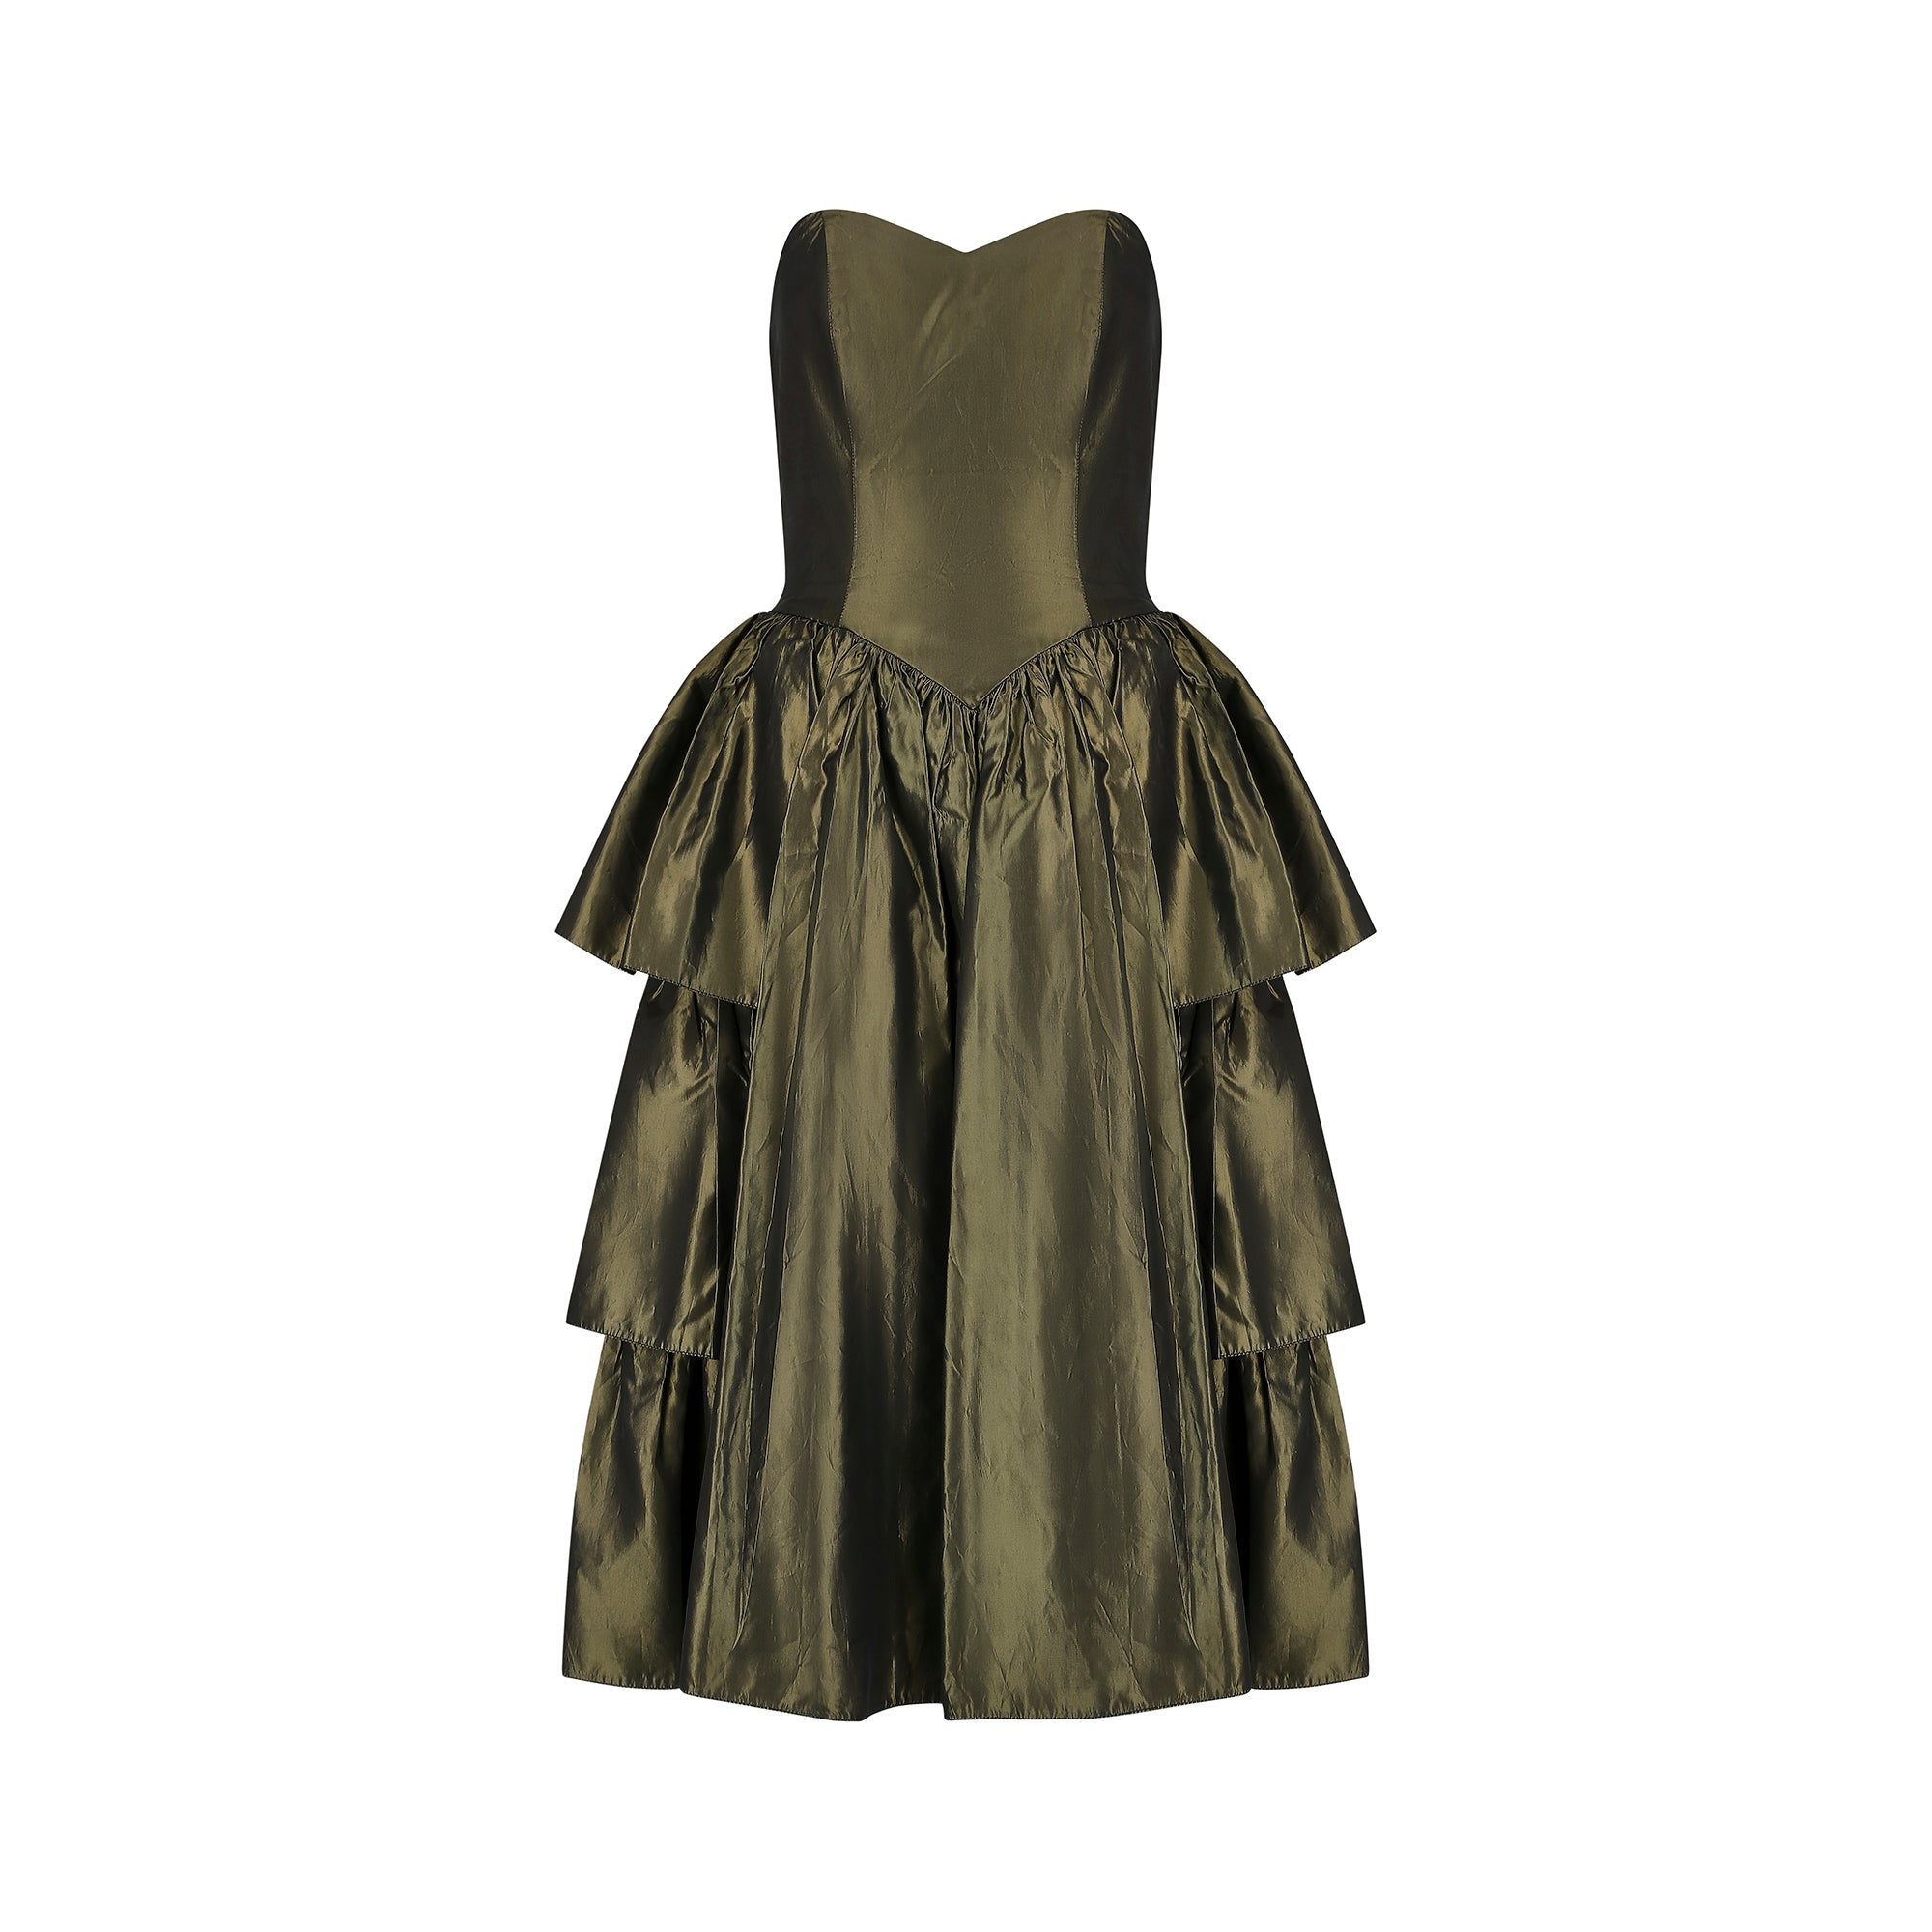 ARCHIVE - 1980s Katerina Strapless Olive Green Taffeta Dress